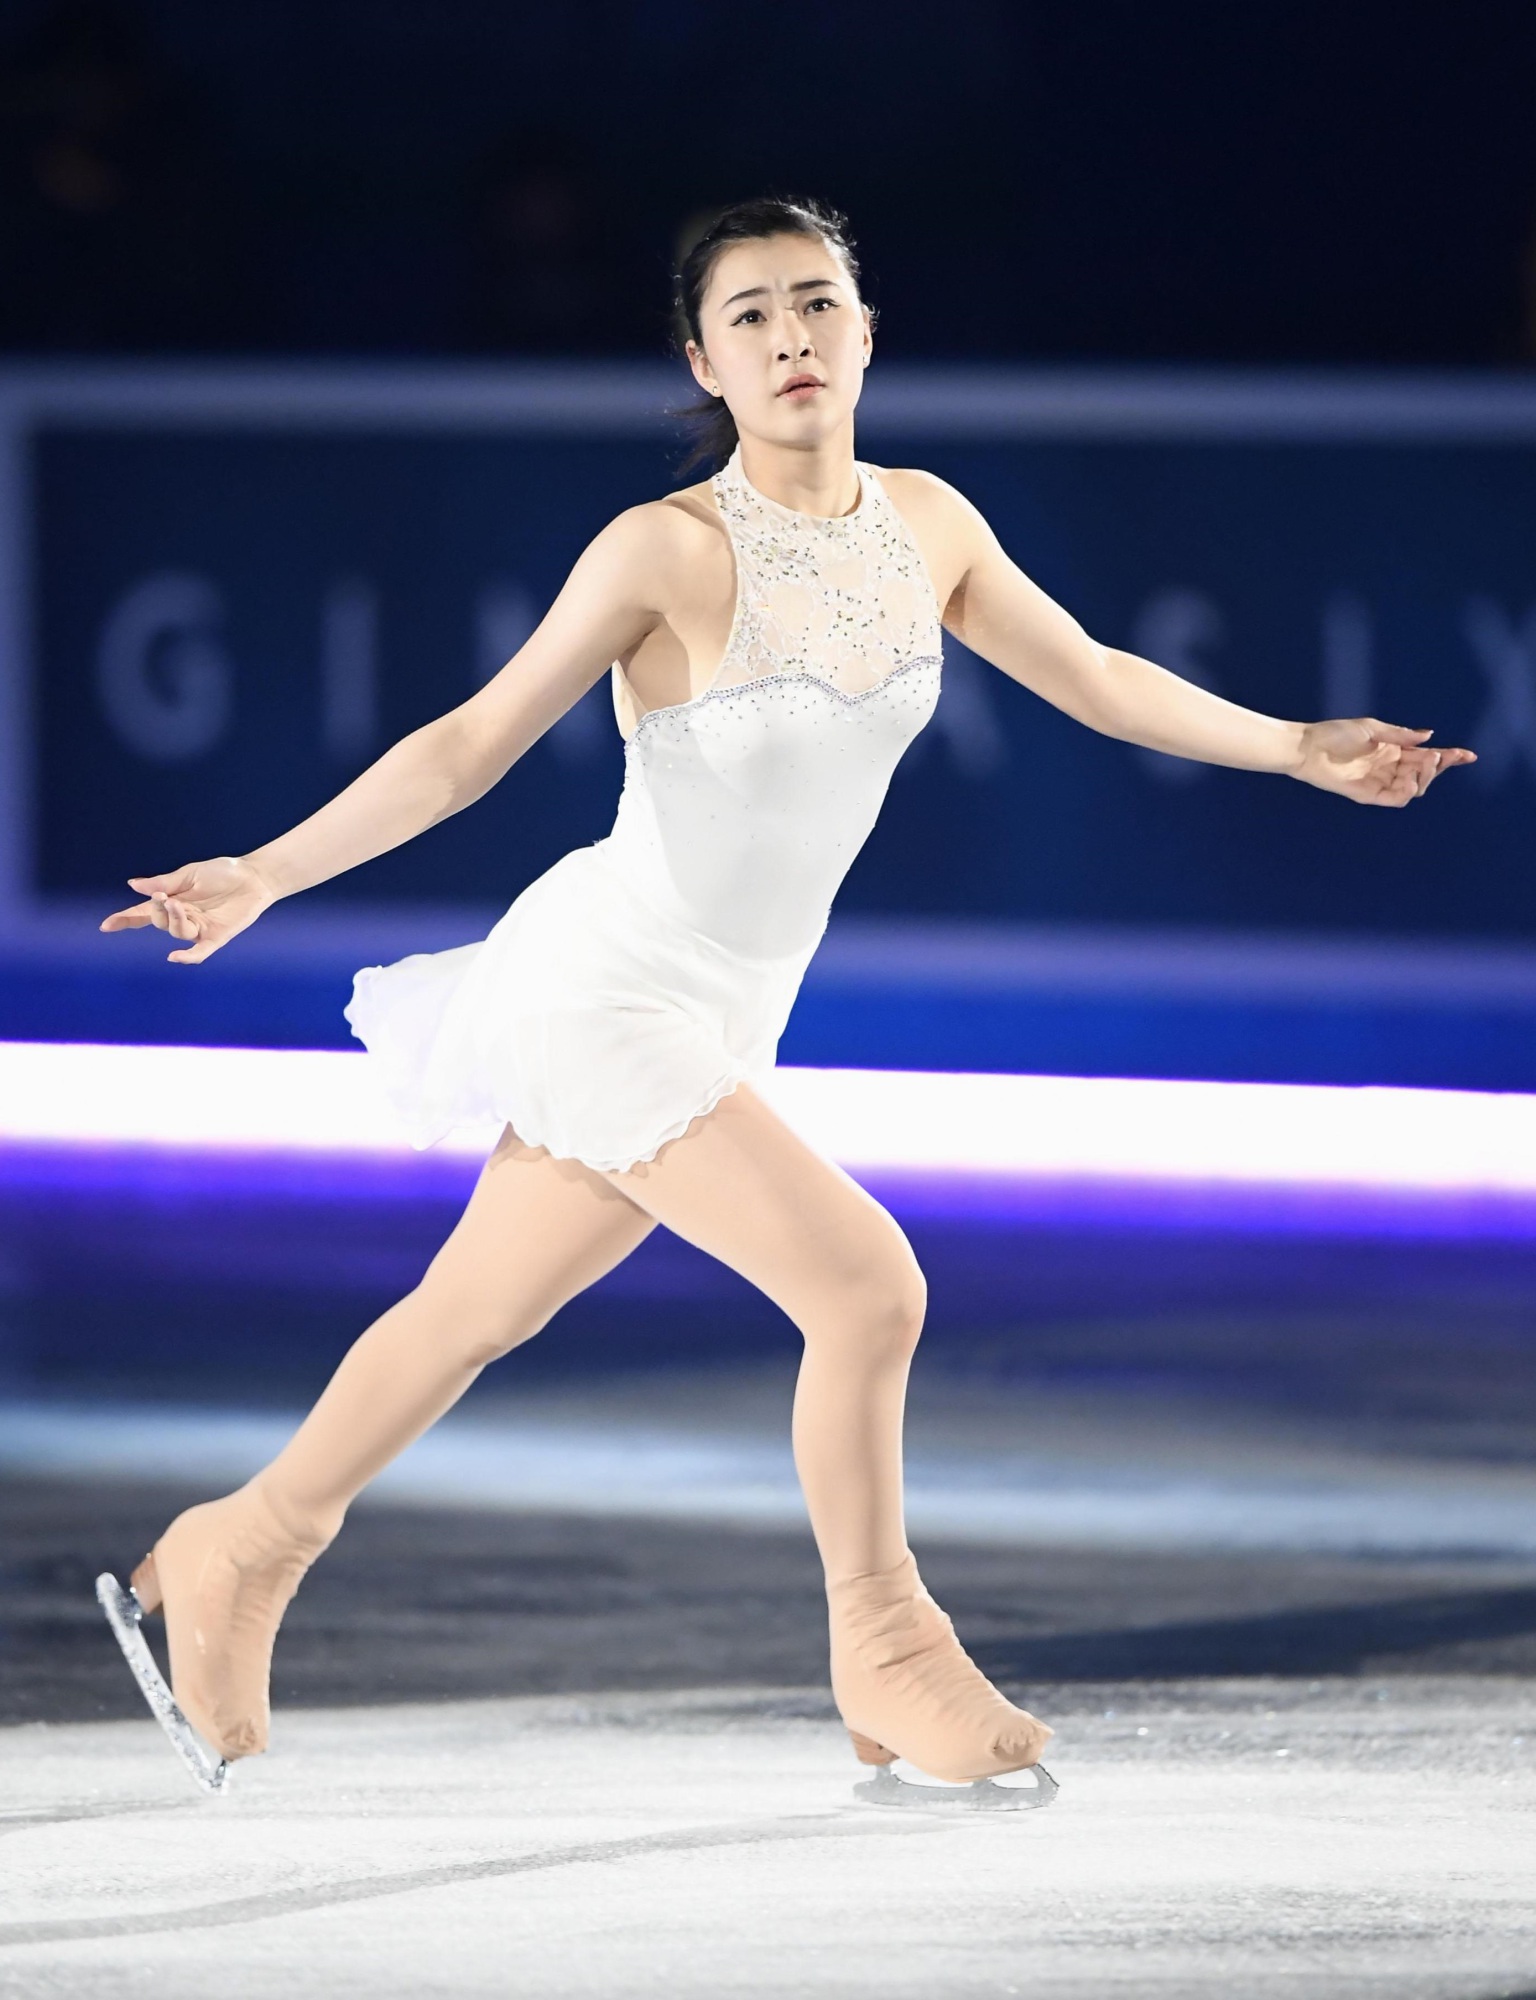 Hanyu looks at raising bar going into Olympic season - The Japan Times